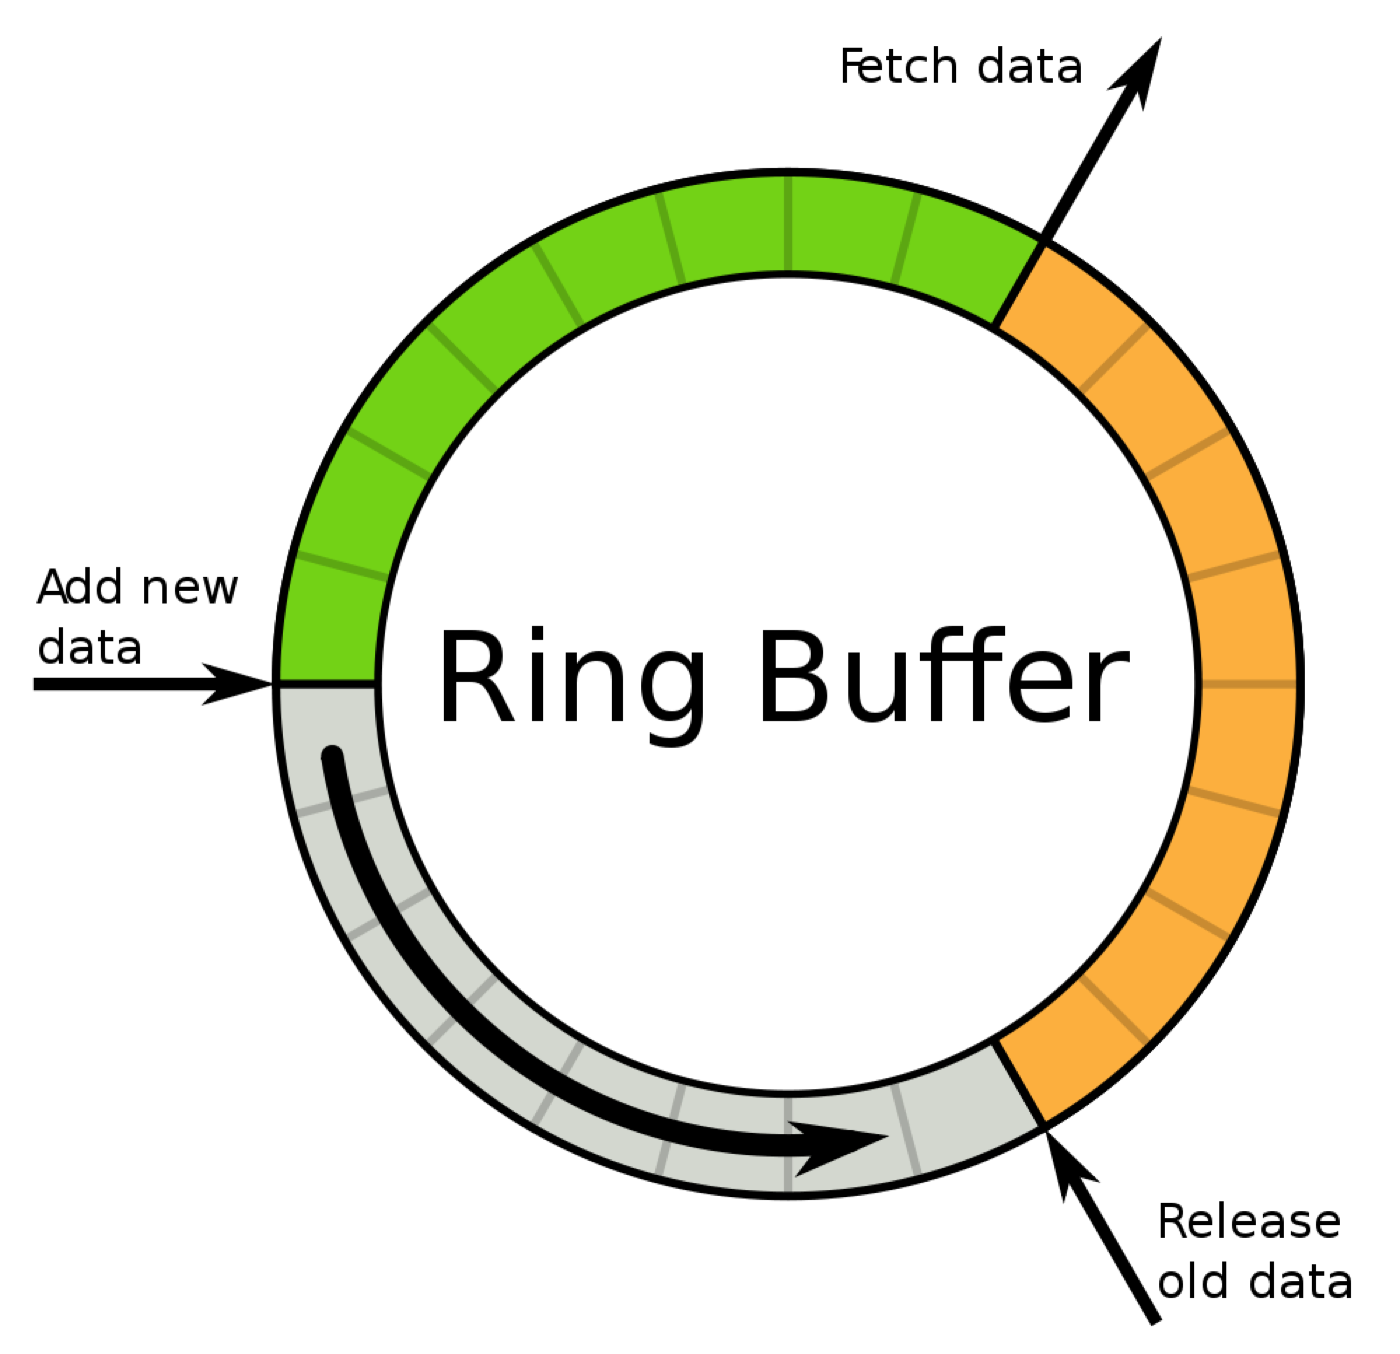 A Ring Buffer